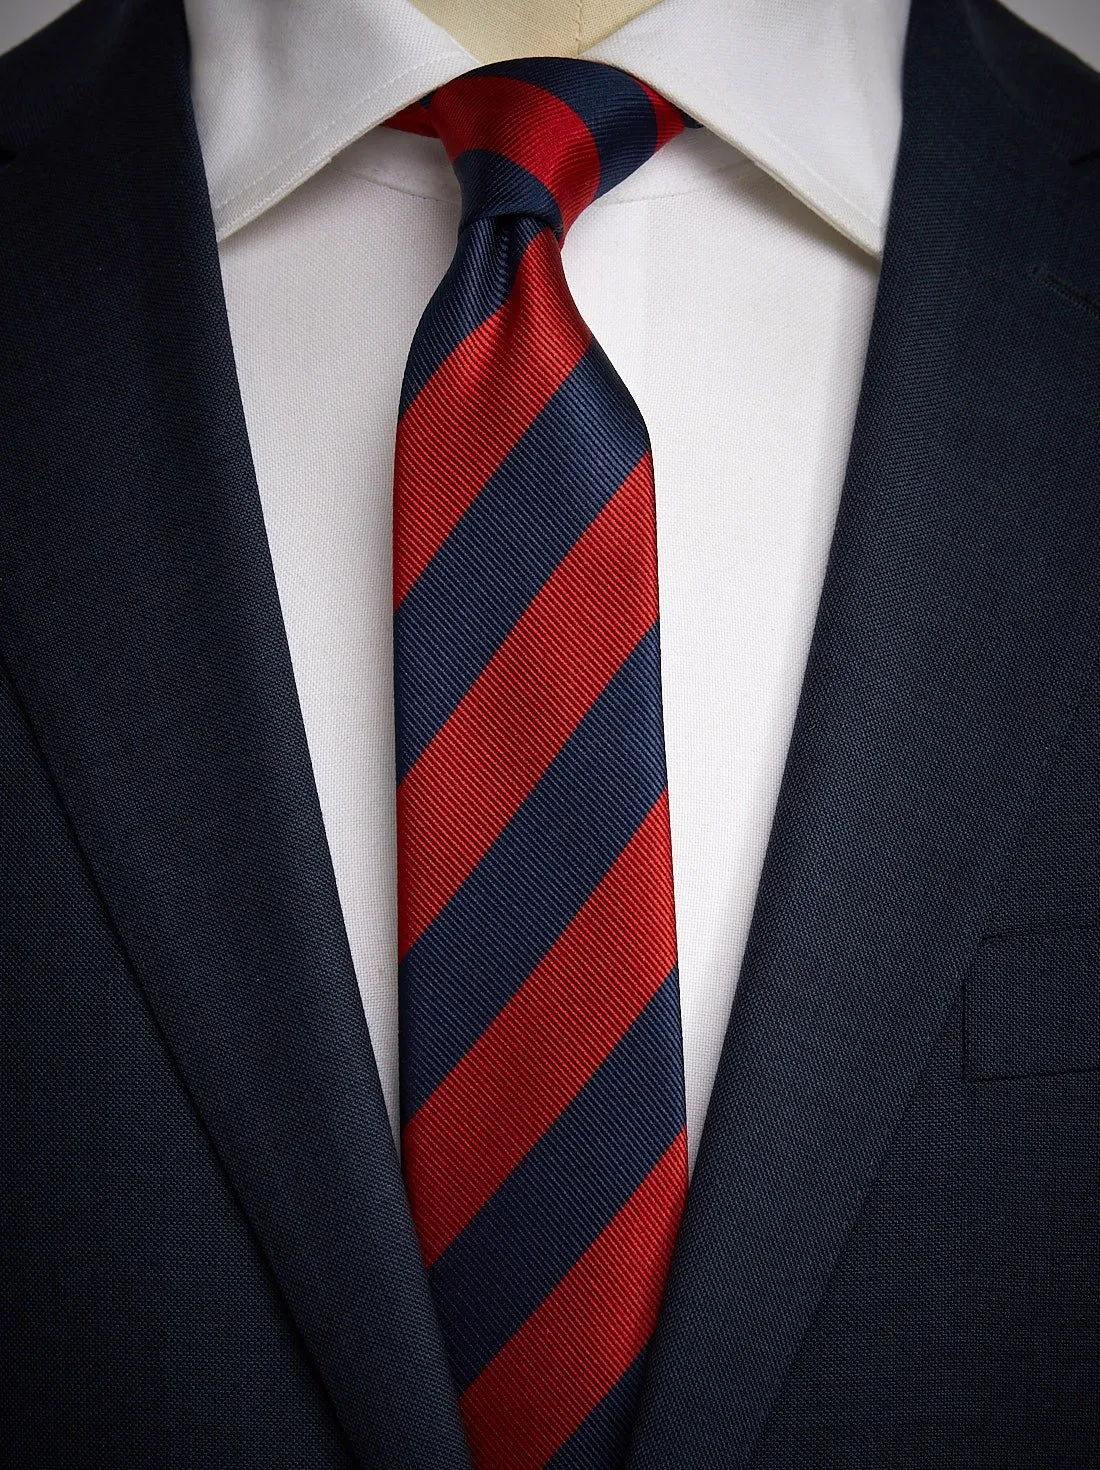 Red & Blue Tie Club